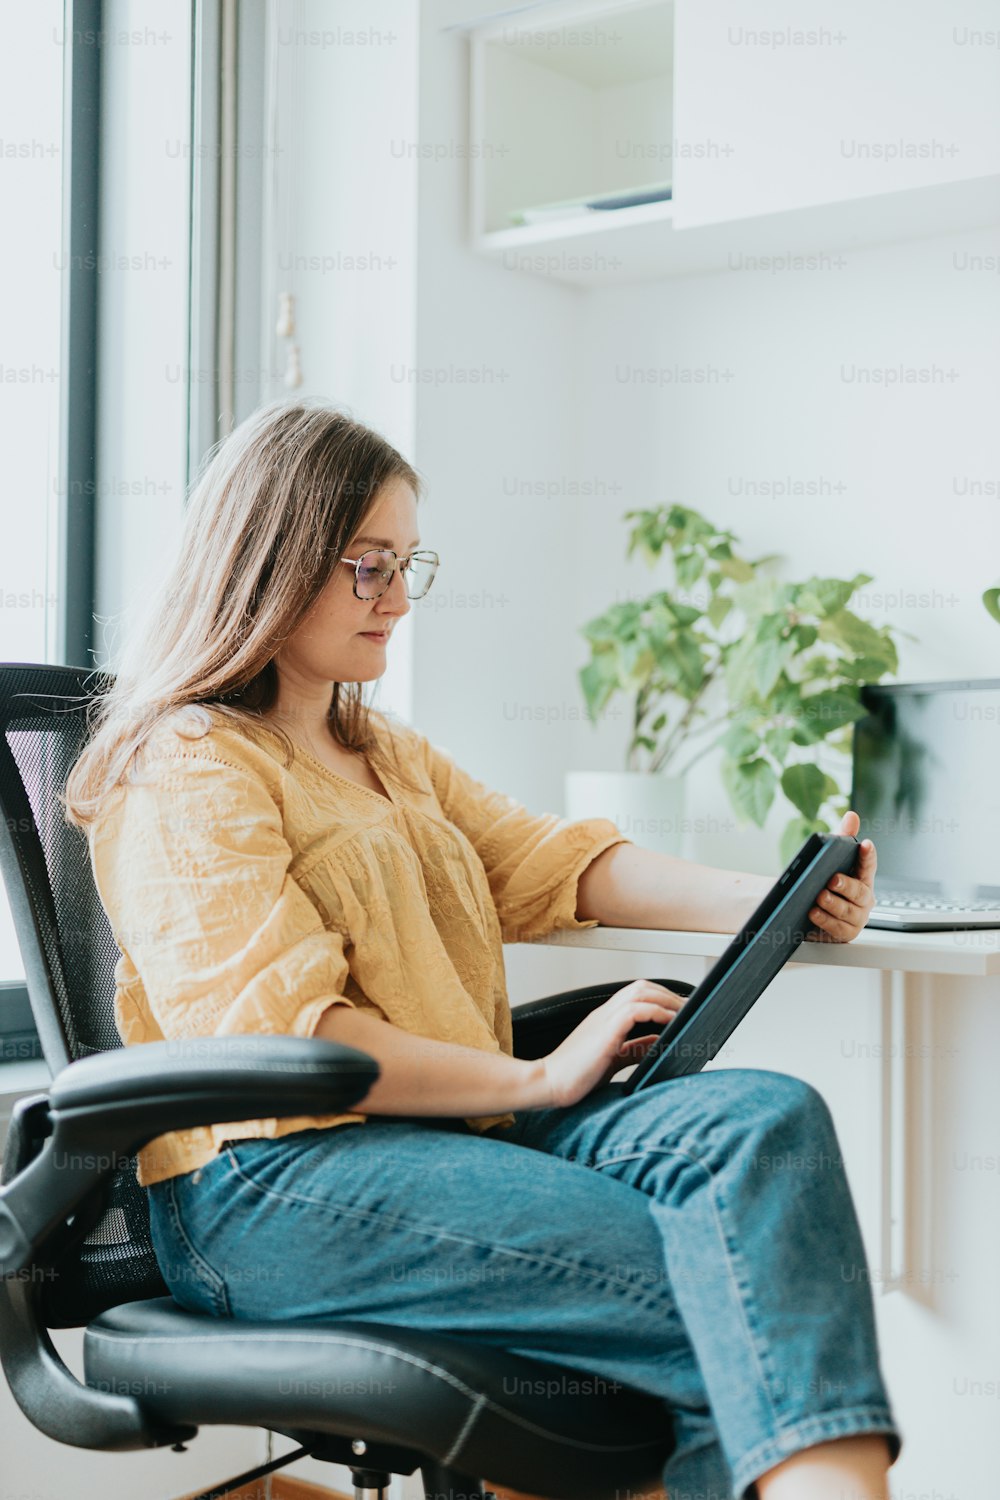 Una donna seduta su una sedia usando un computer portatile